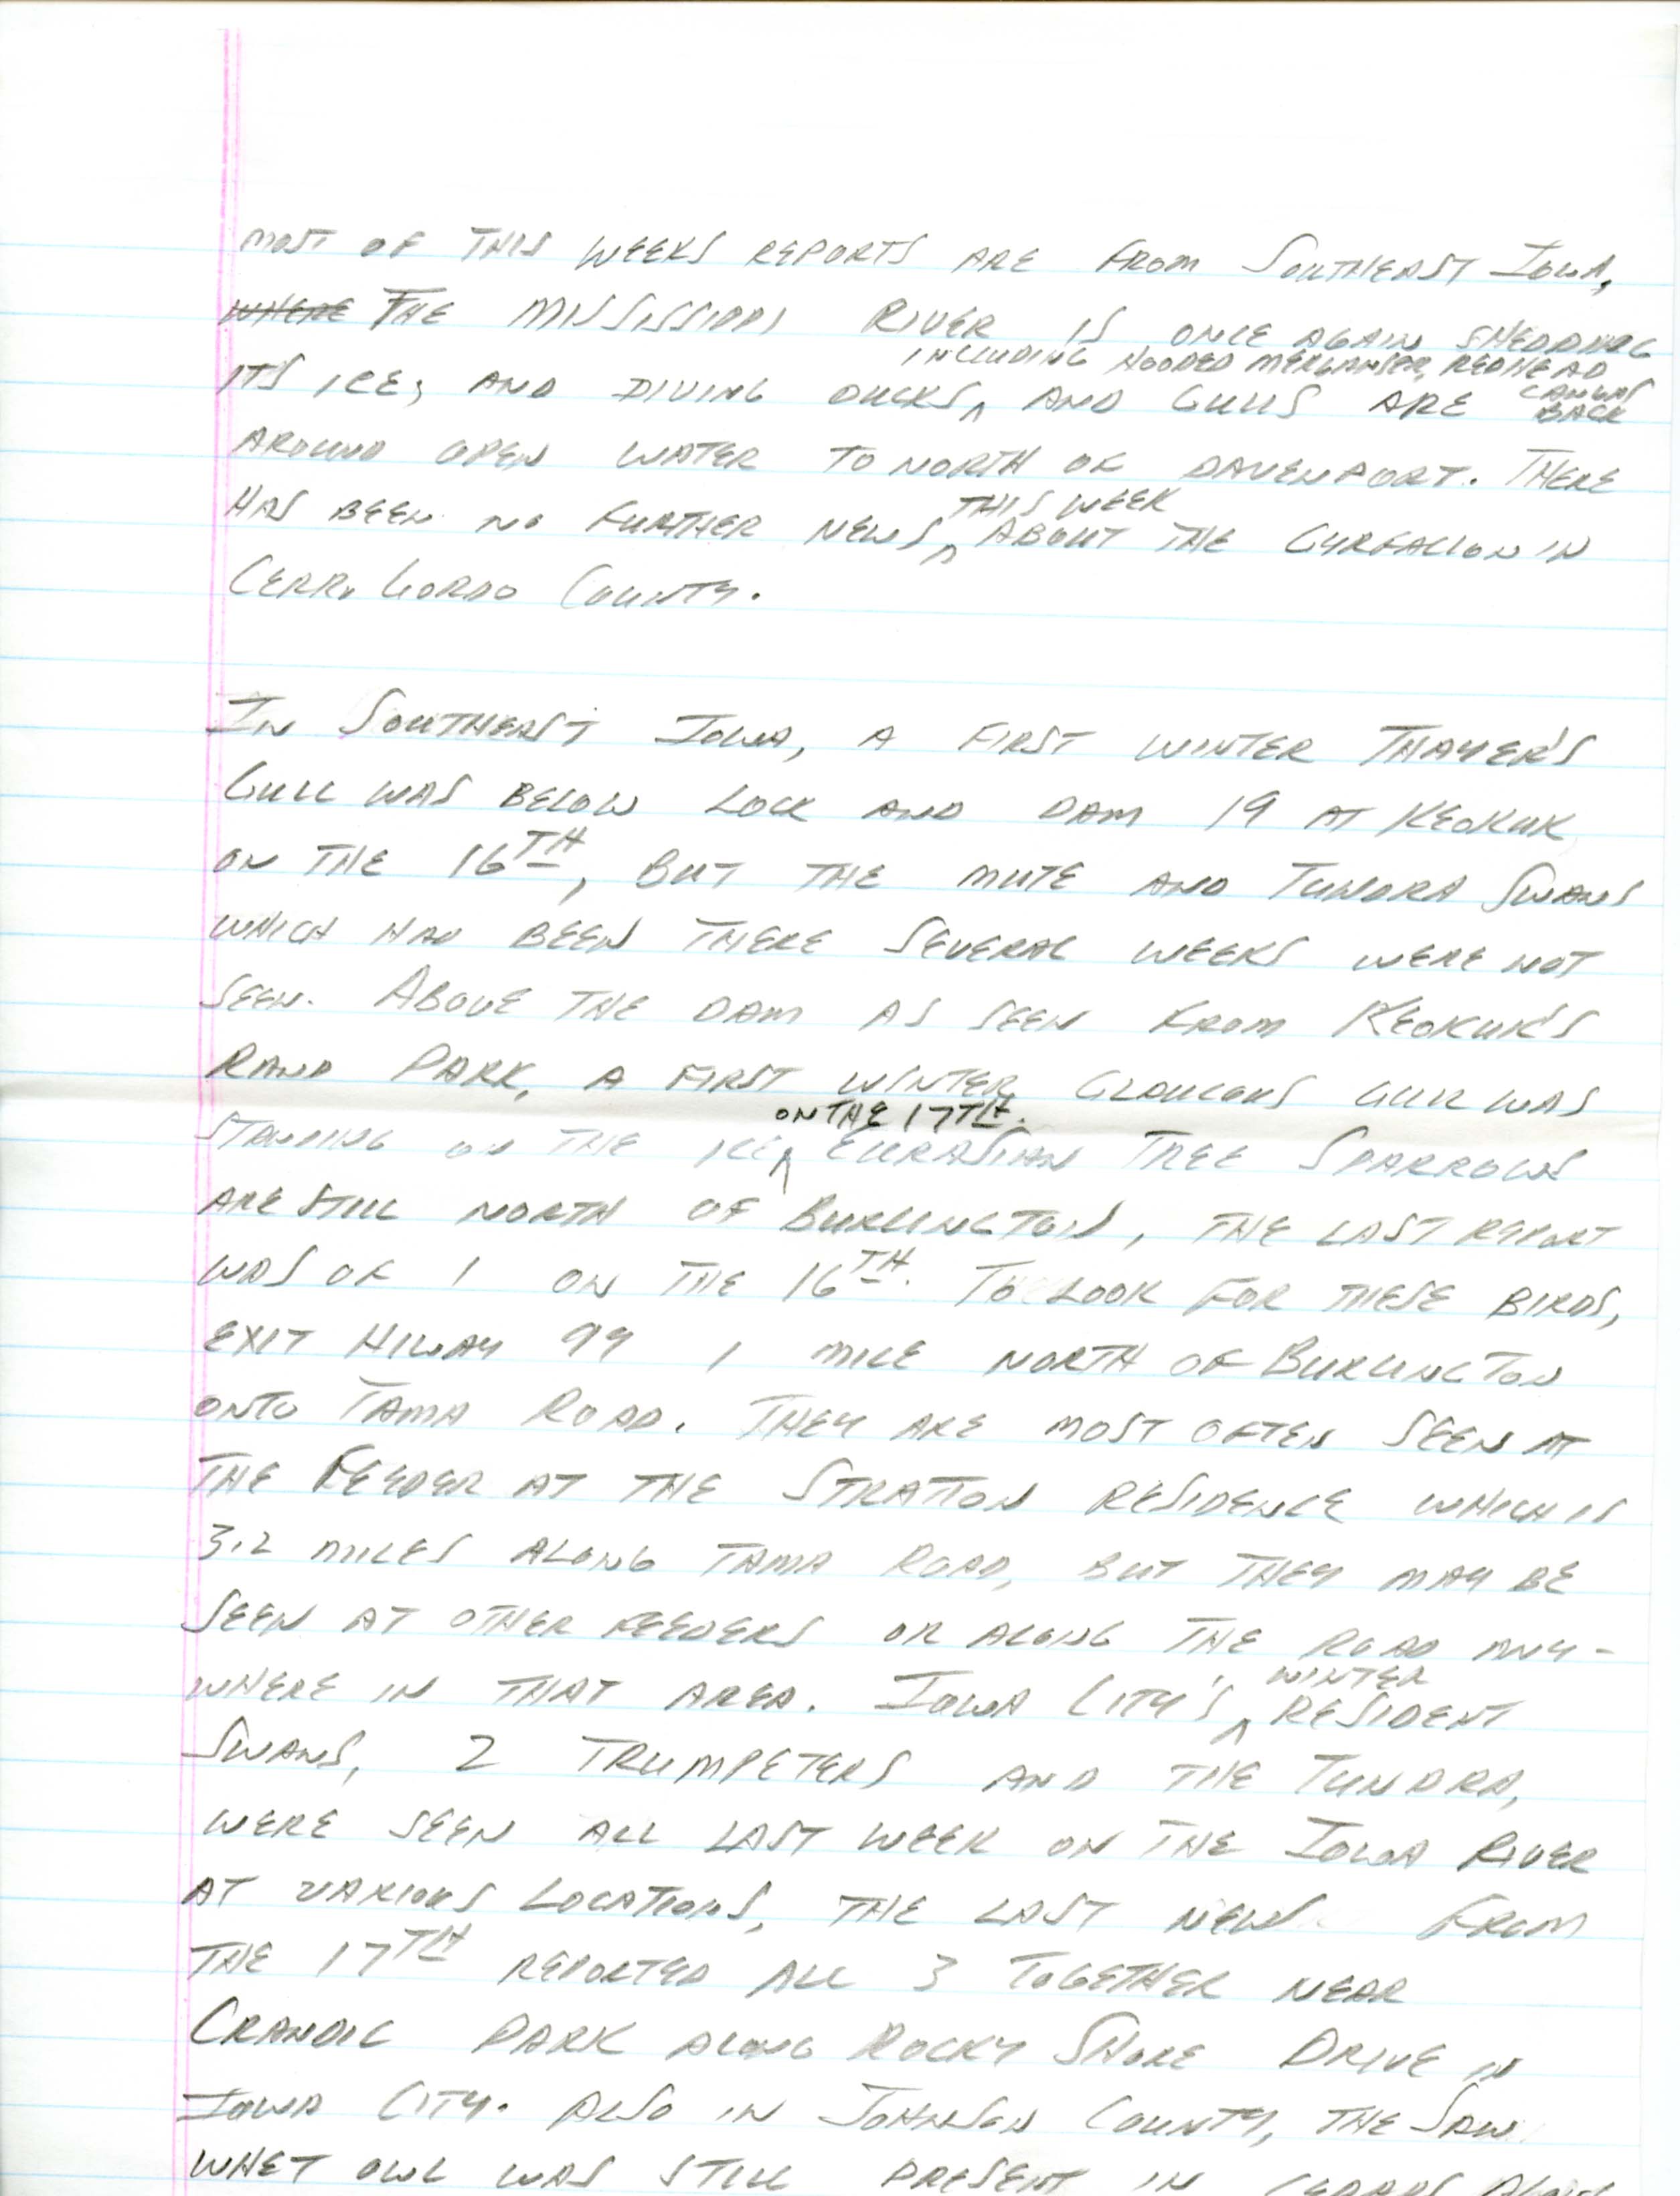 Iowa Birdline update, February 18, 1991 notes